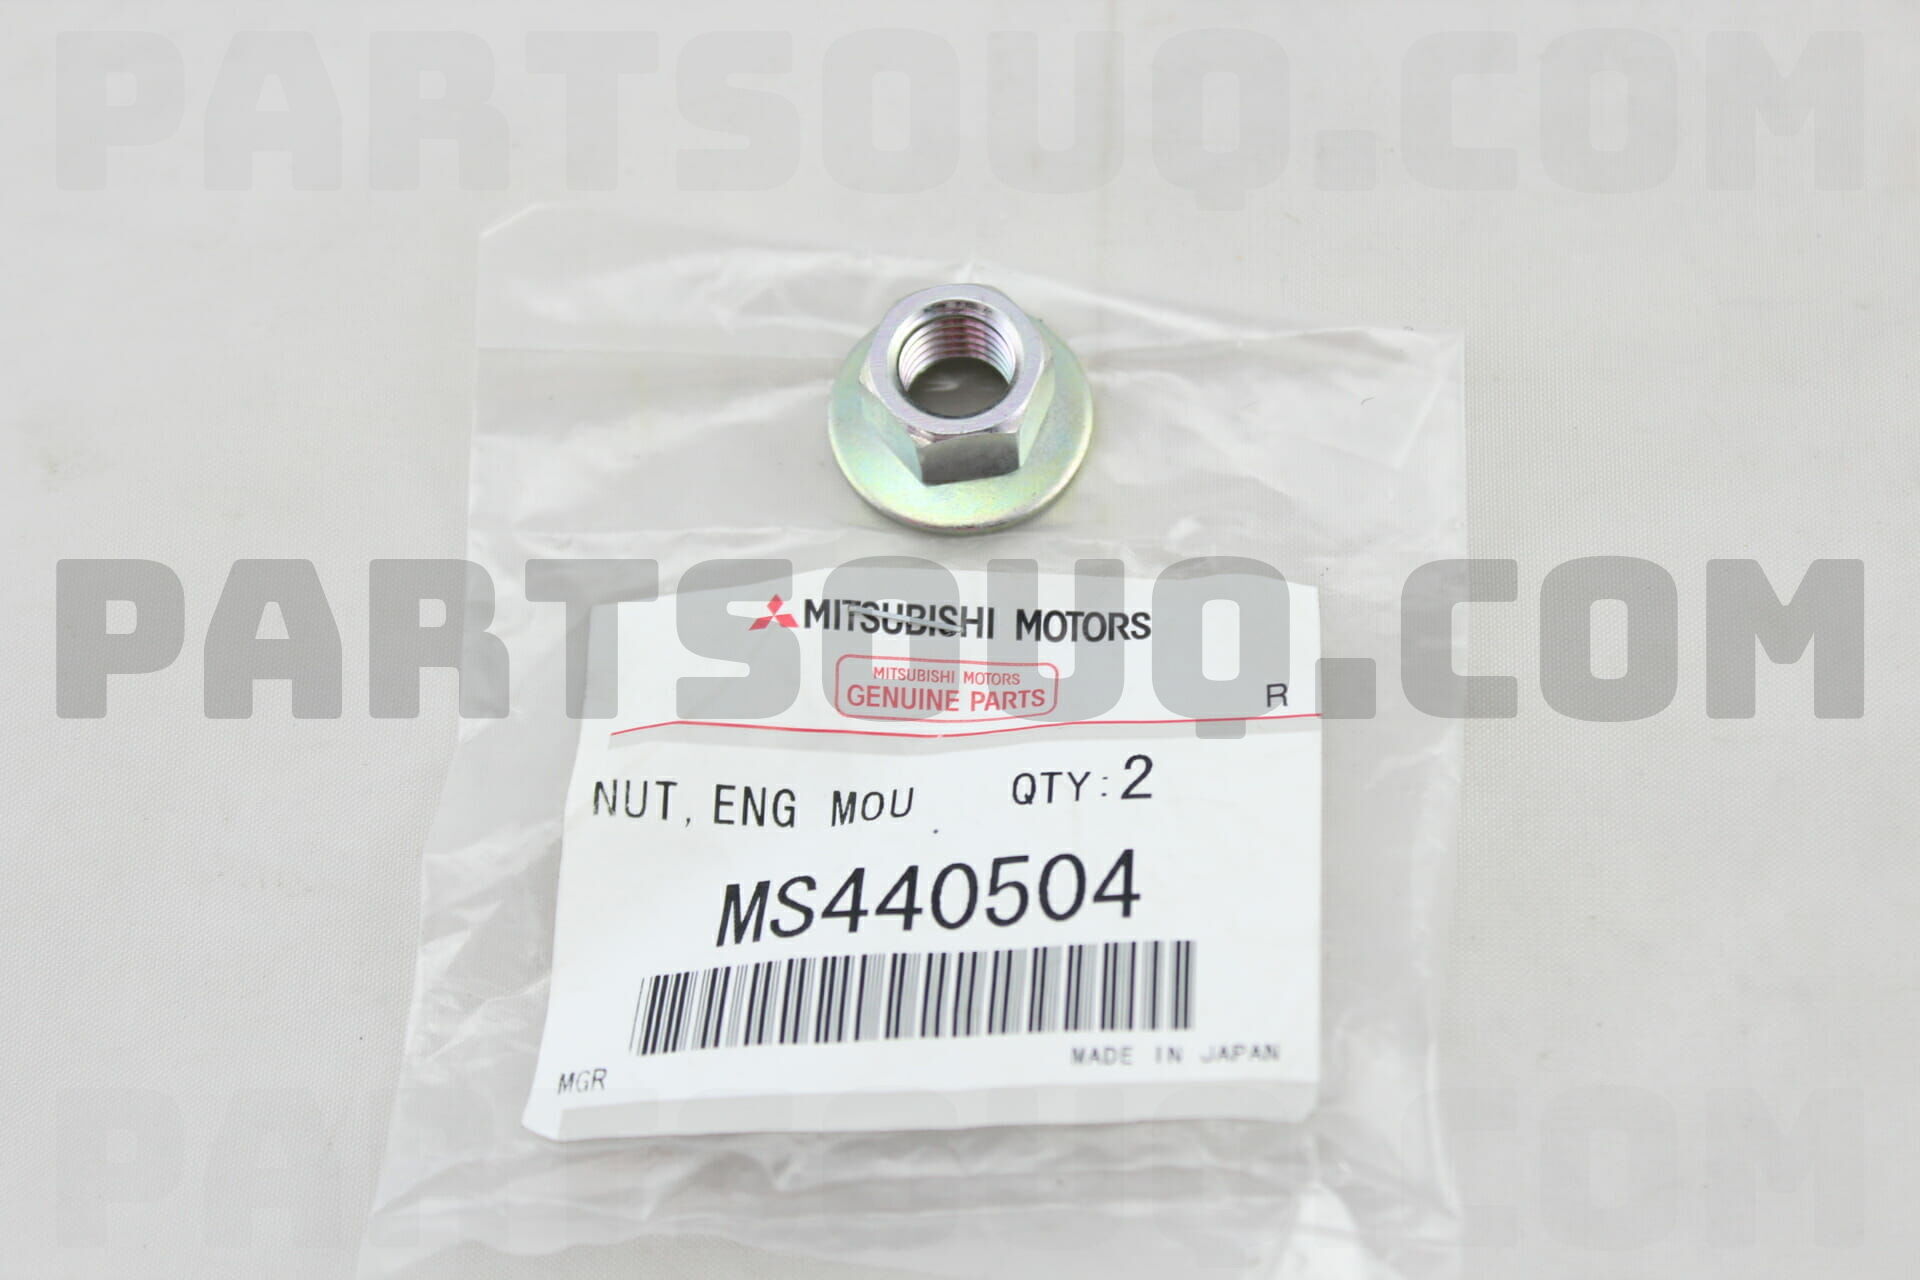 NUT,ENG RR MOUNTING MB288653 | Mitsubishi Parts | PartSouq